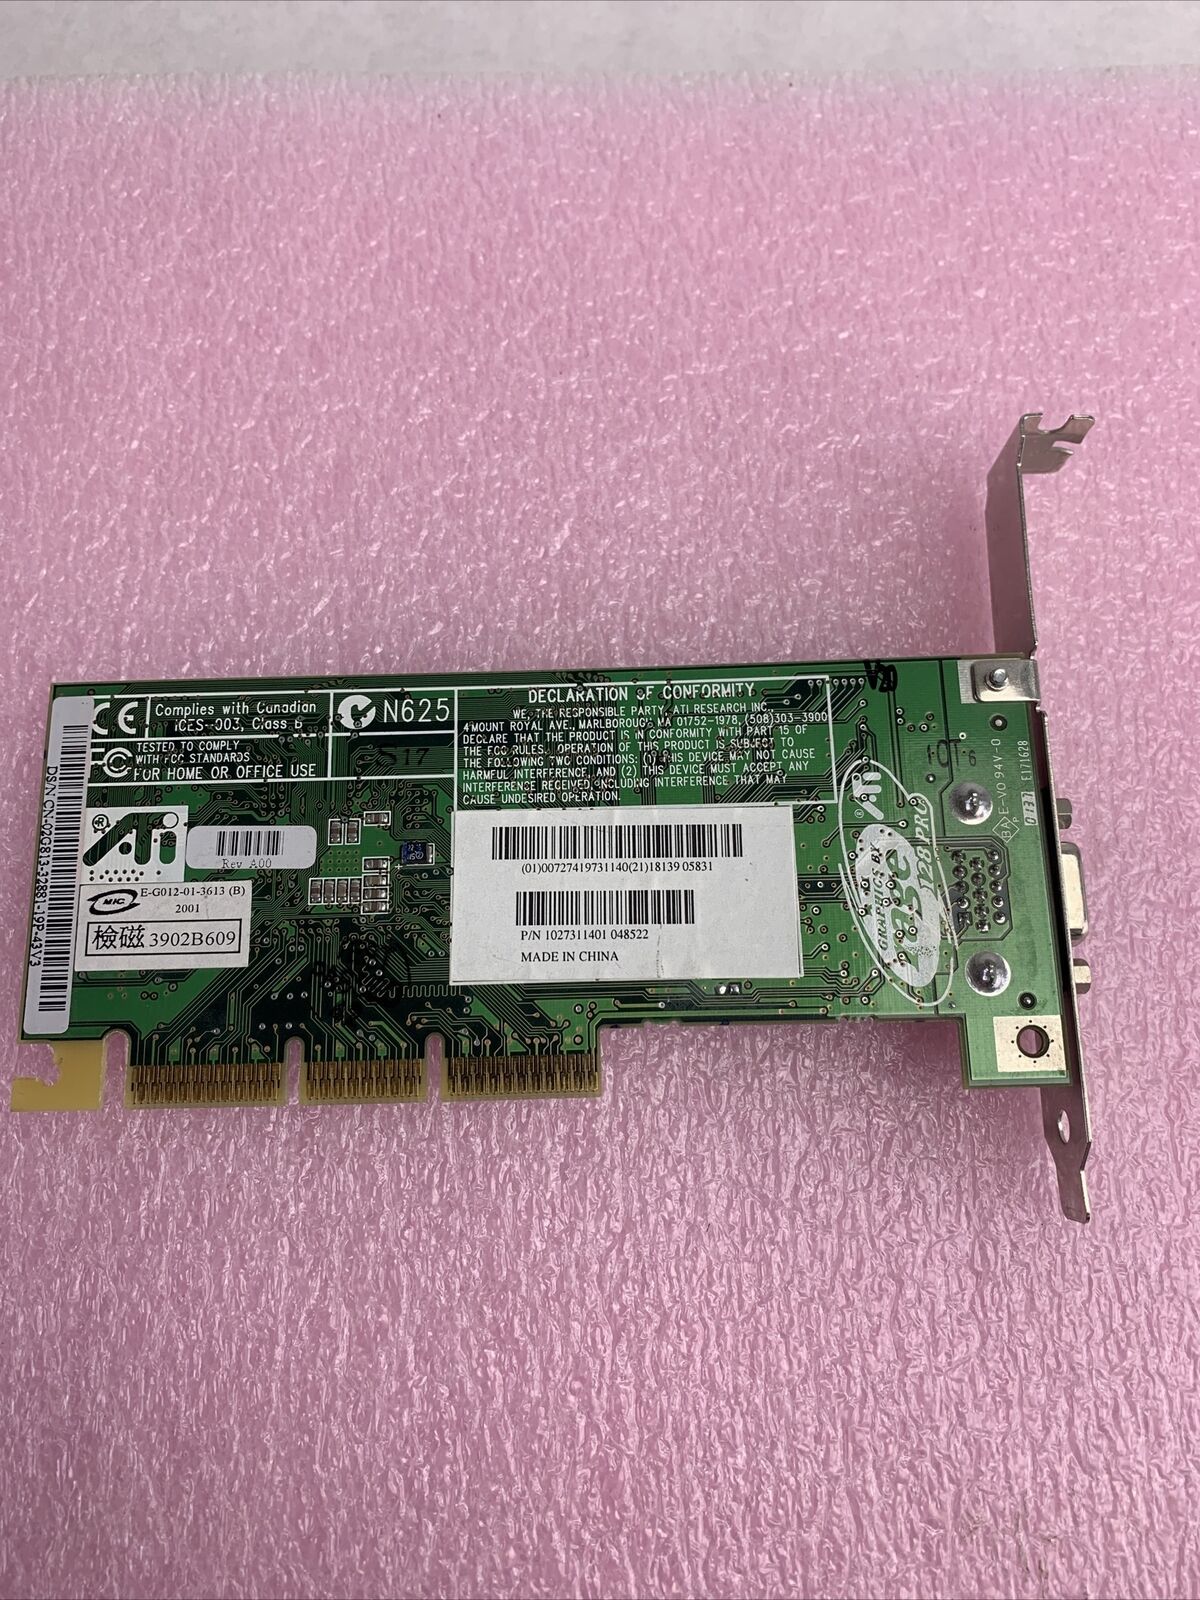 ATI N625 (PN 109-81100-02) AGP Video Graphics Card